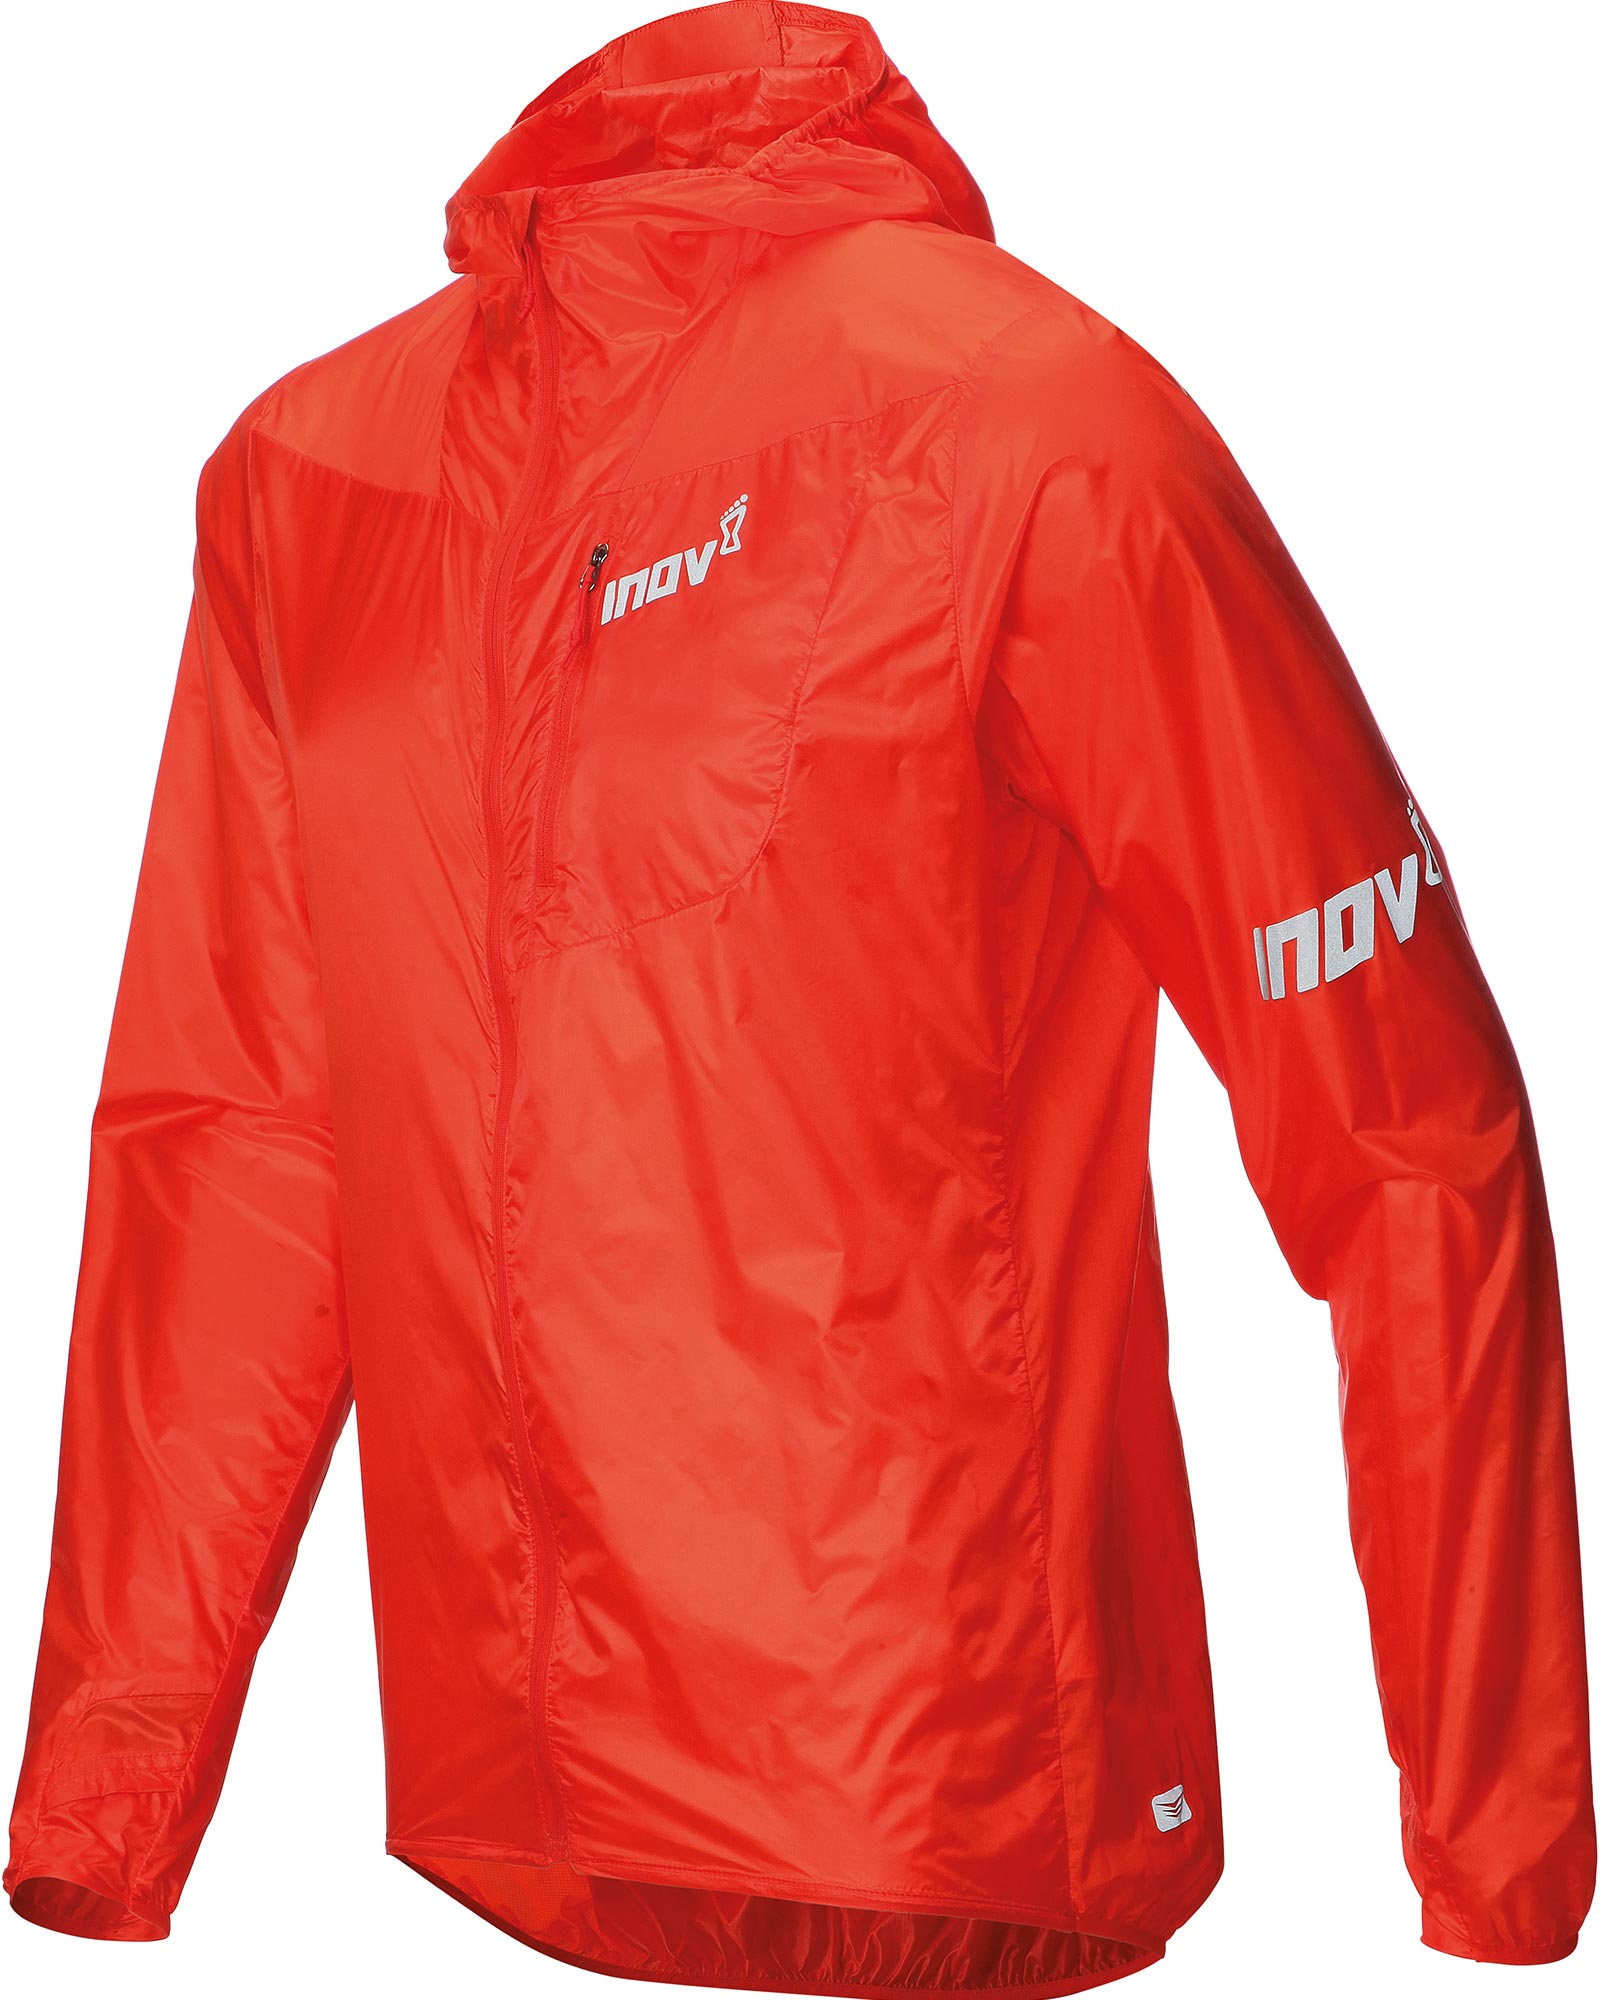 Inov 8 Men’s Full Zip Windshell Jacket - Red XL